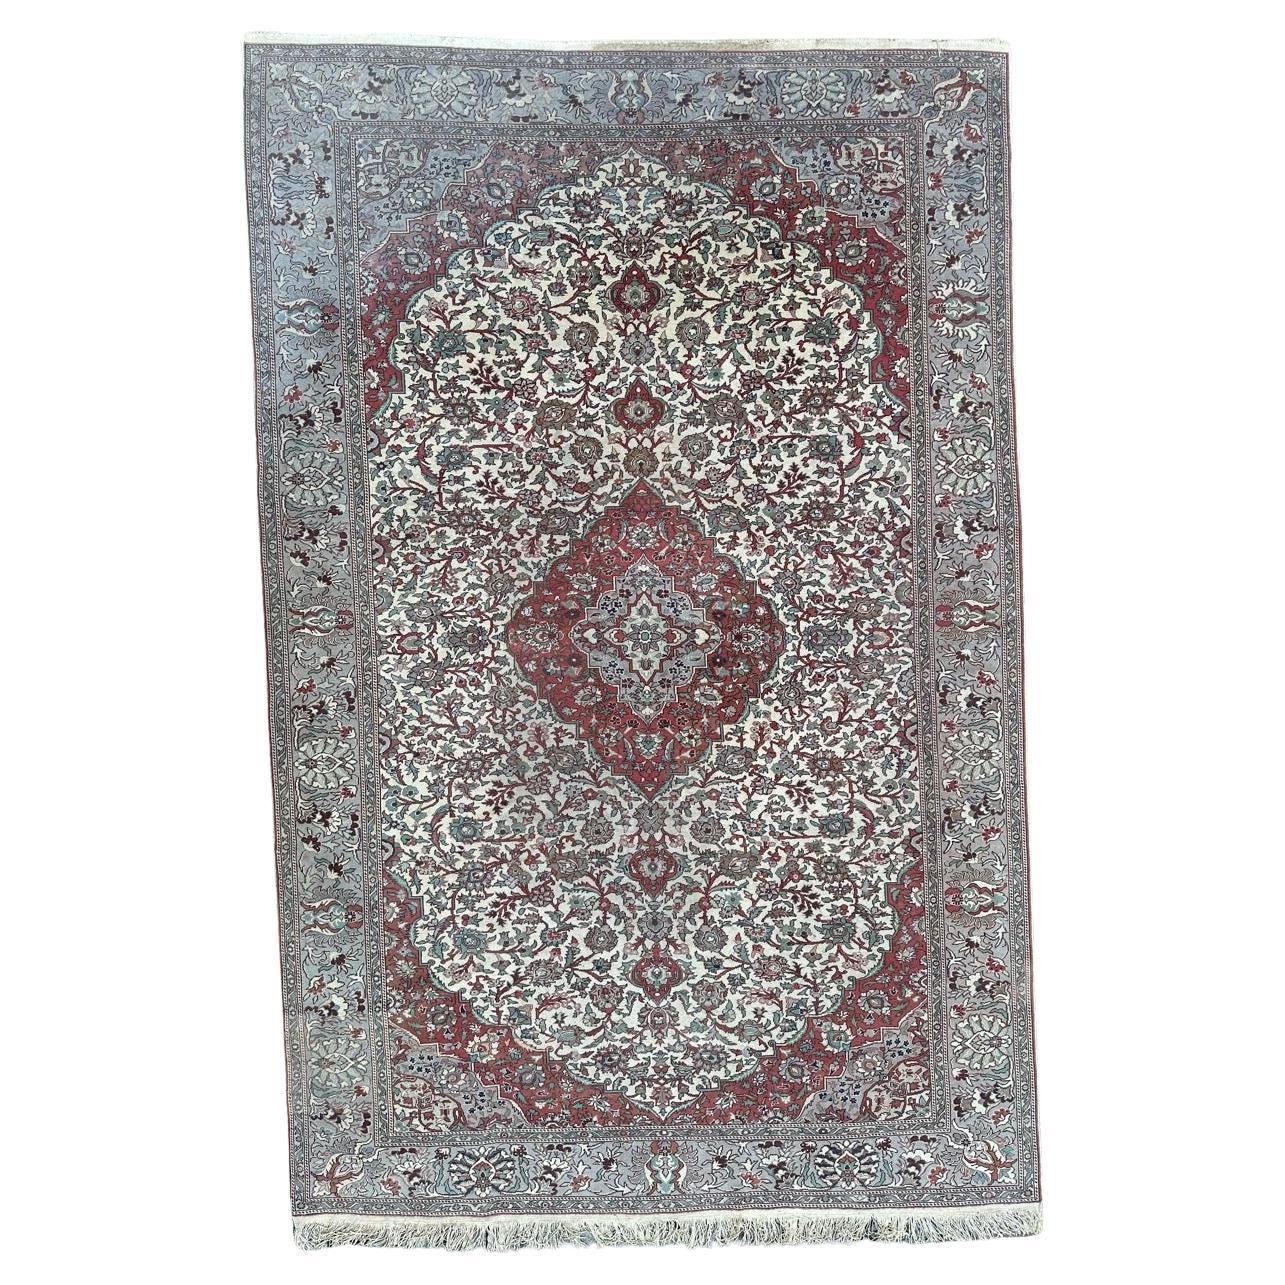 Joli grand tapis turc Kayseri vintage de Bobyrug 